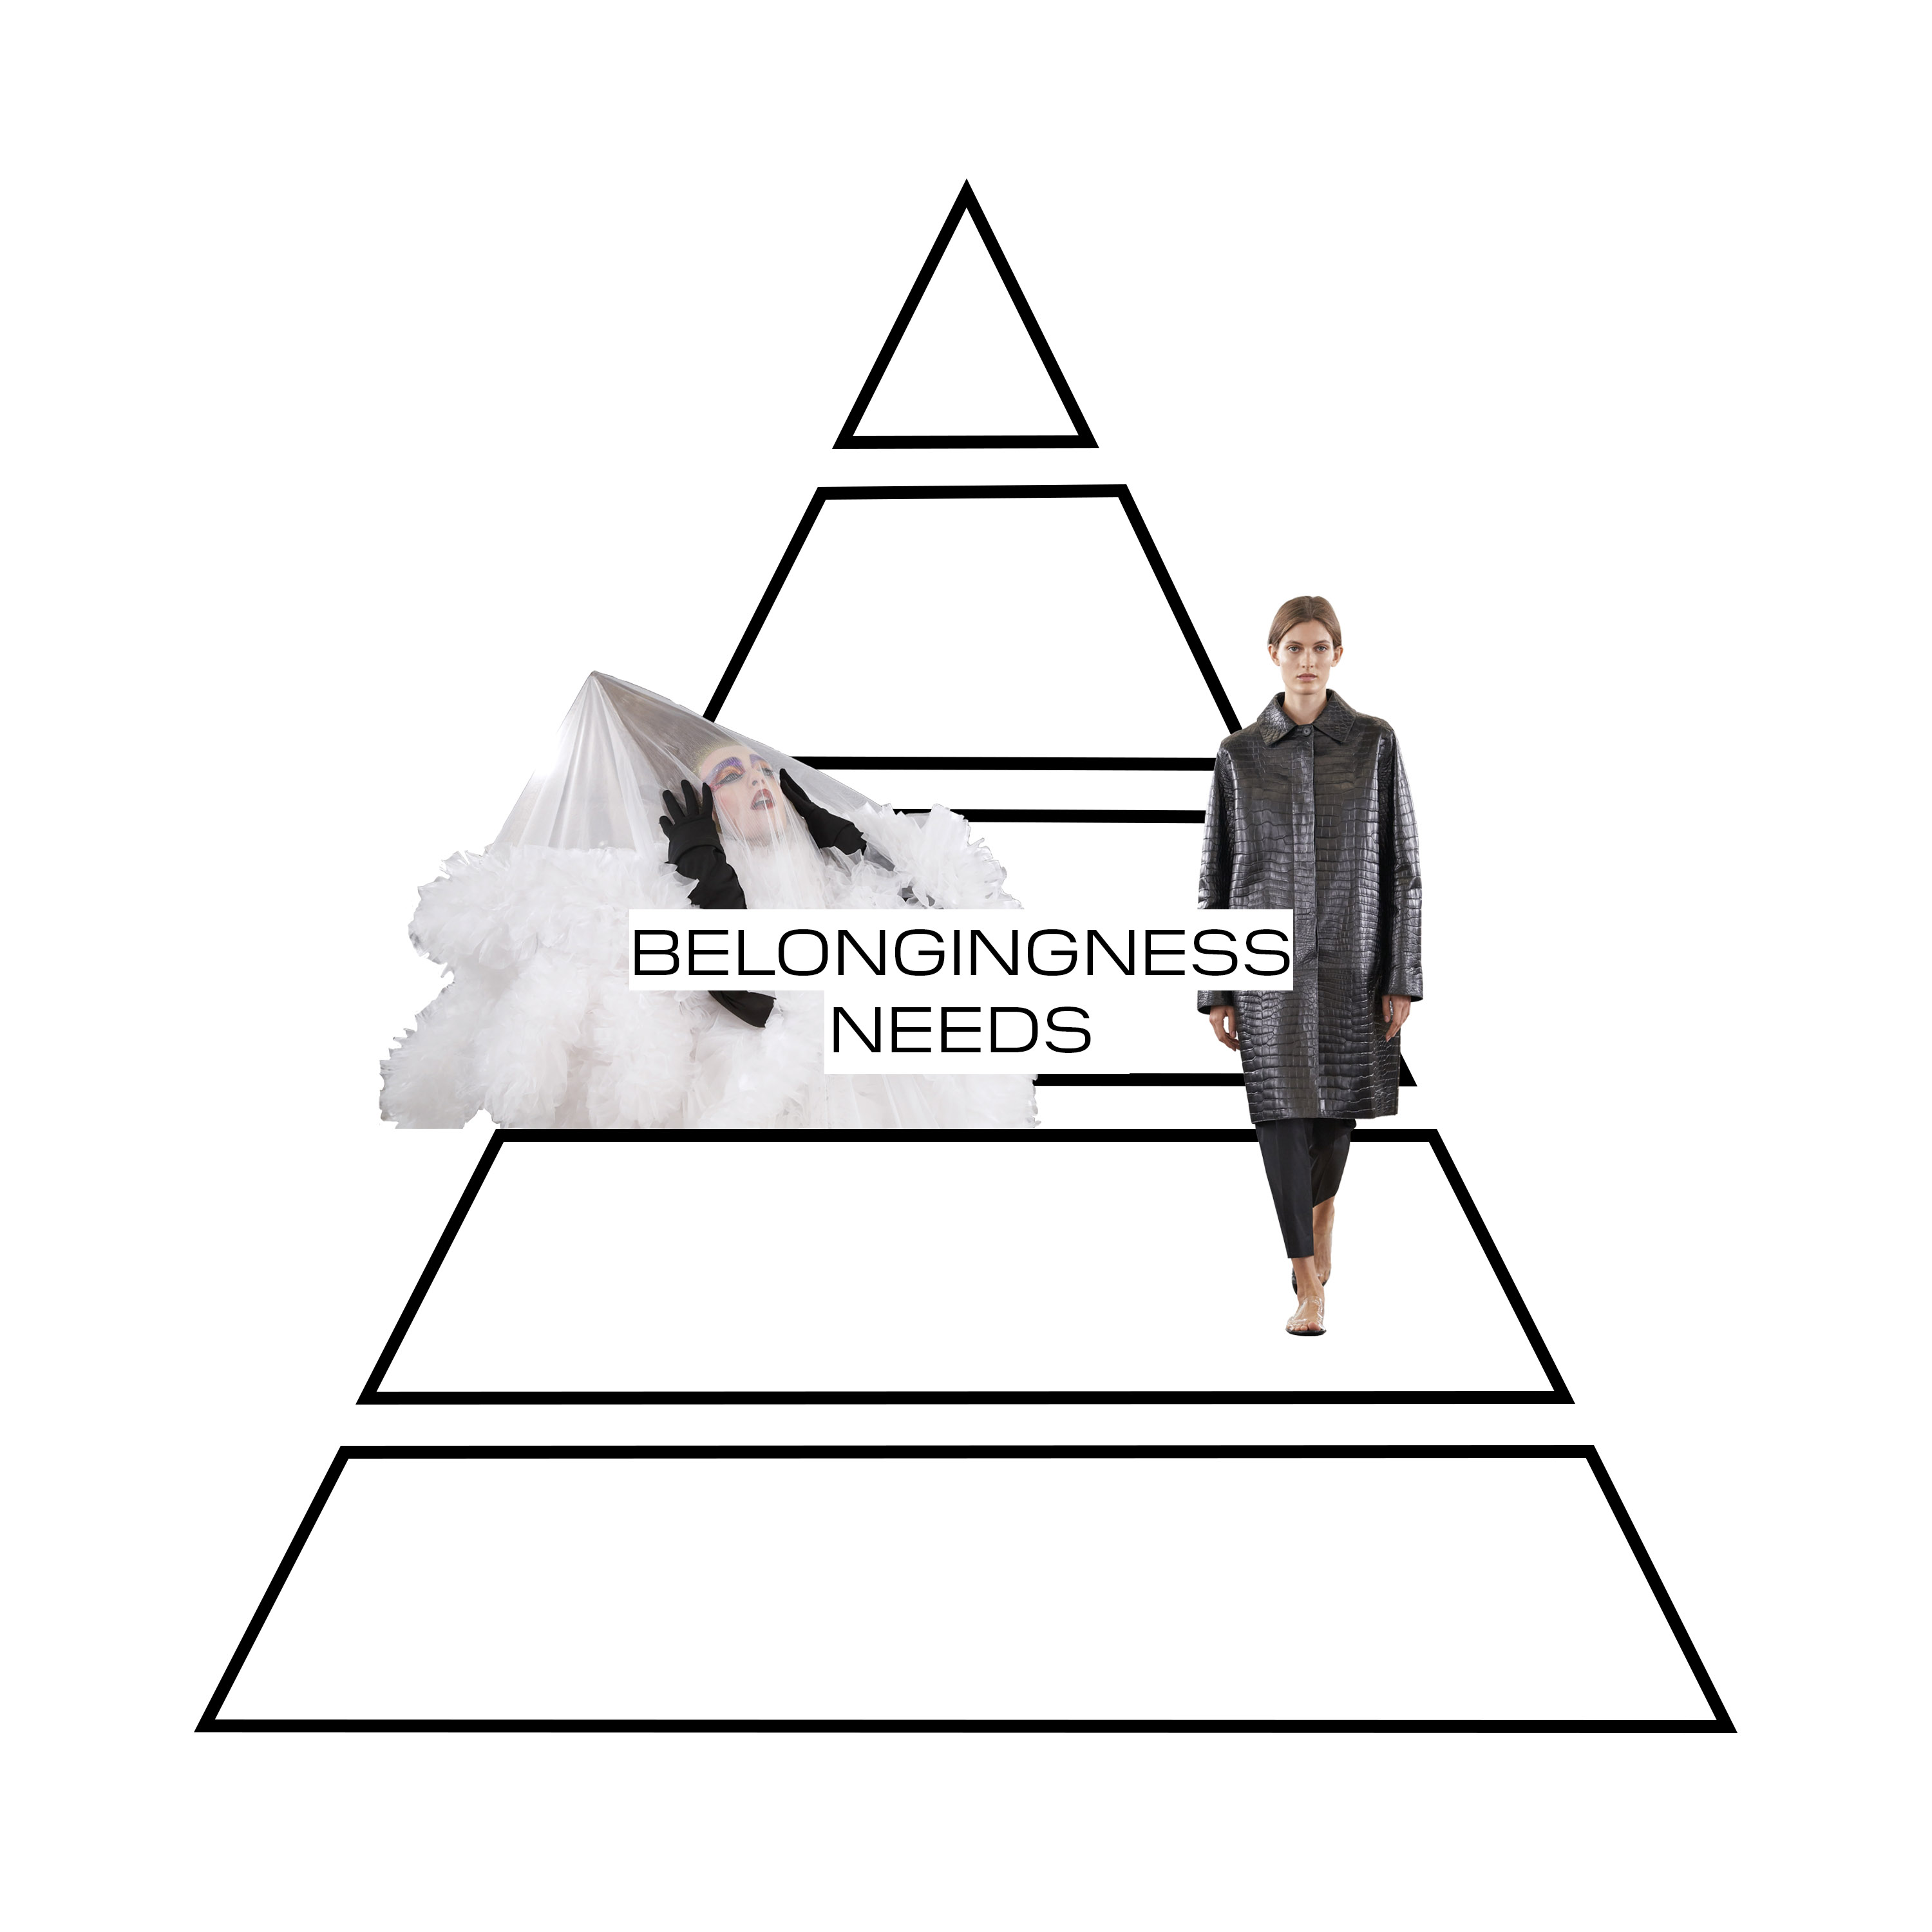 Fash105 Maslow and Pyramid of Fashion_Diversification_Fashion retail